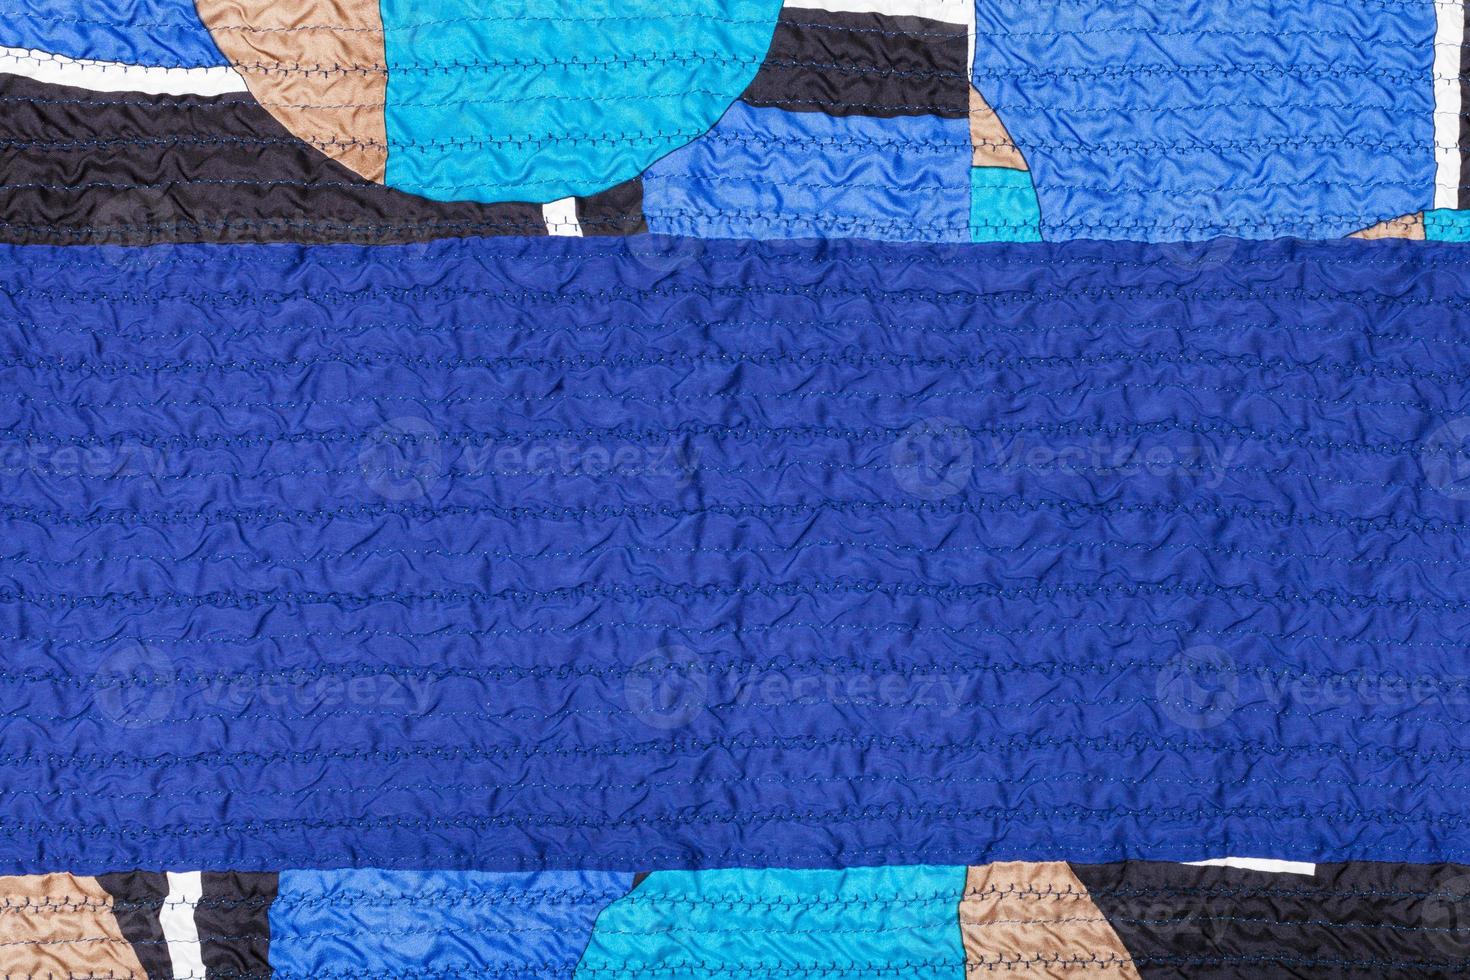 sys skrynkliga blå silke tyg och patchwork foto